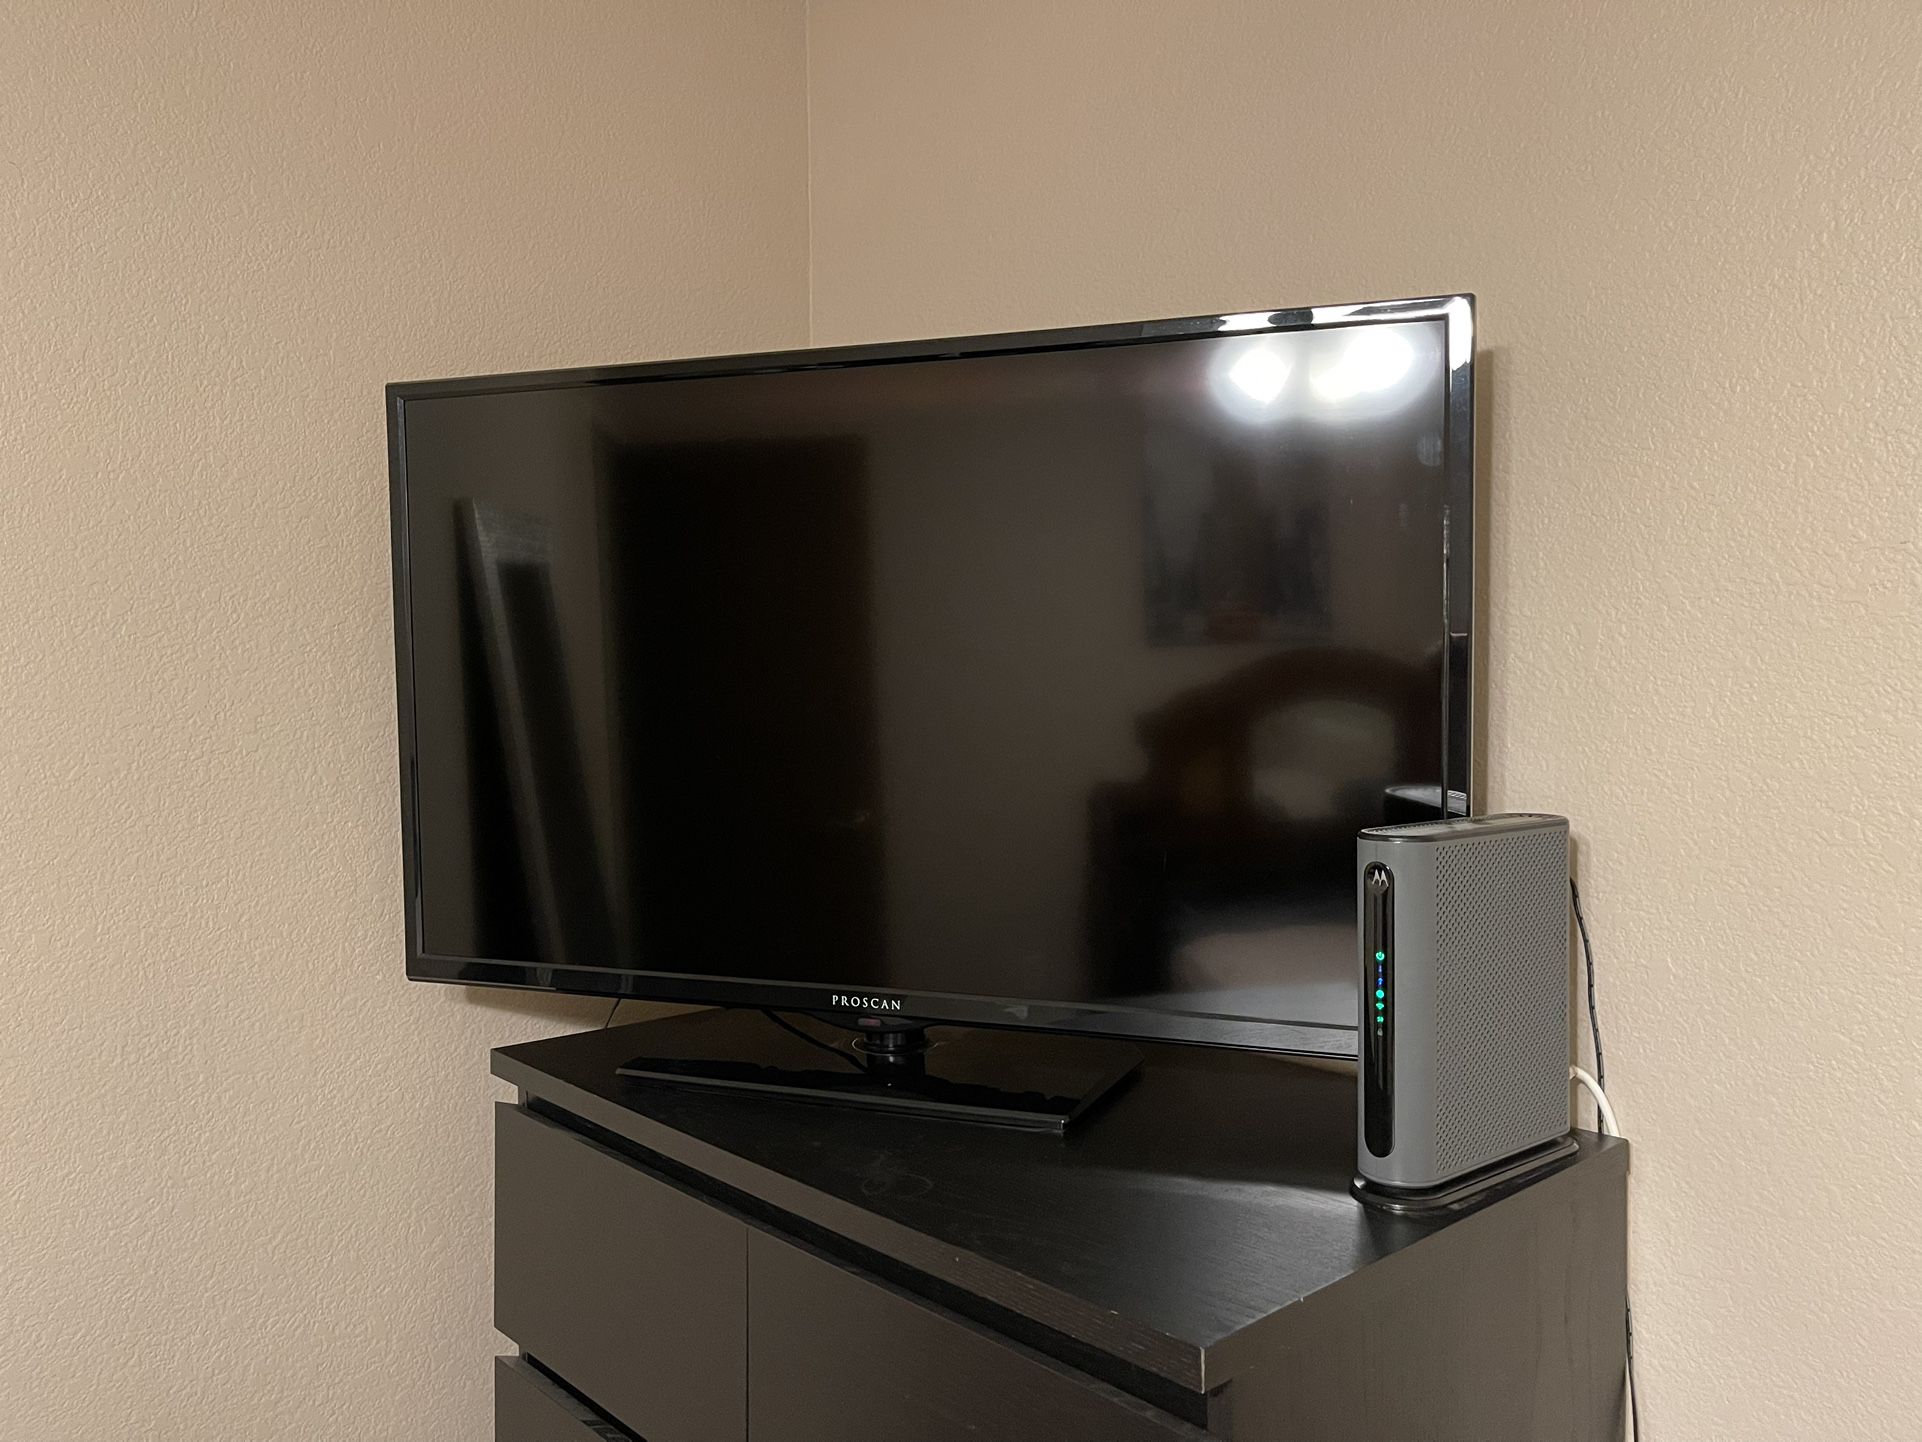 40” Proscan LCD TV